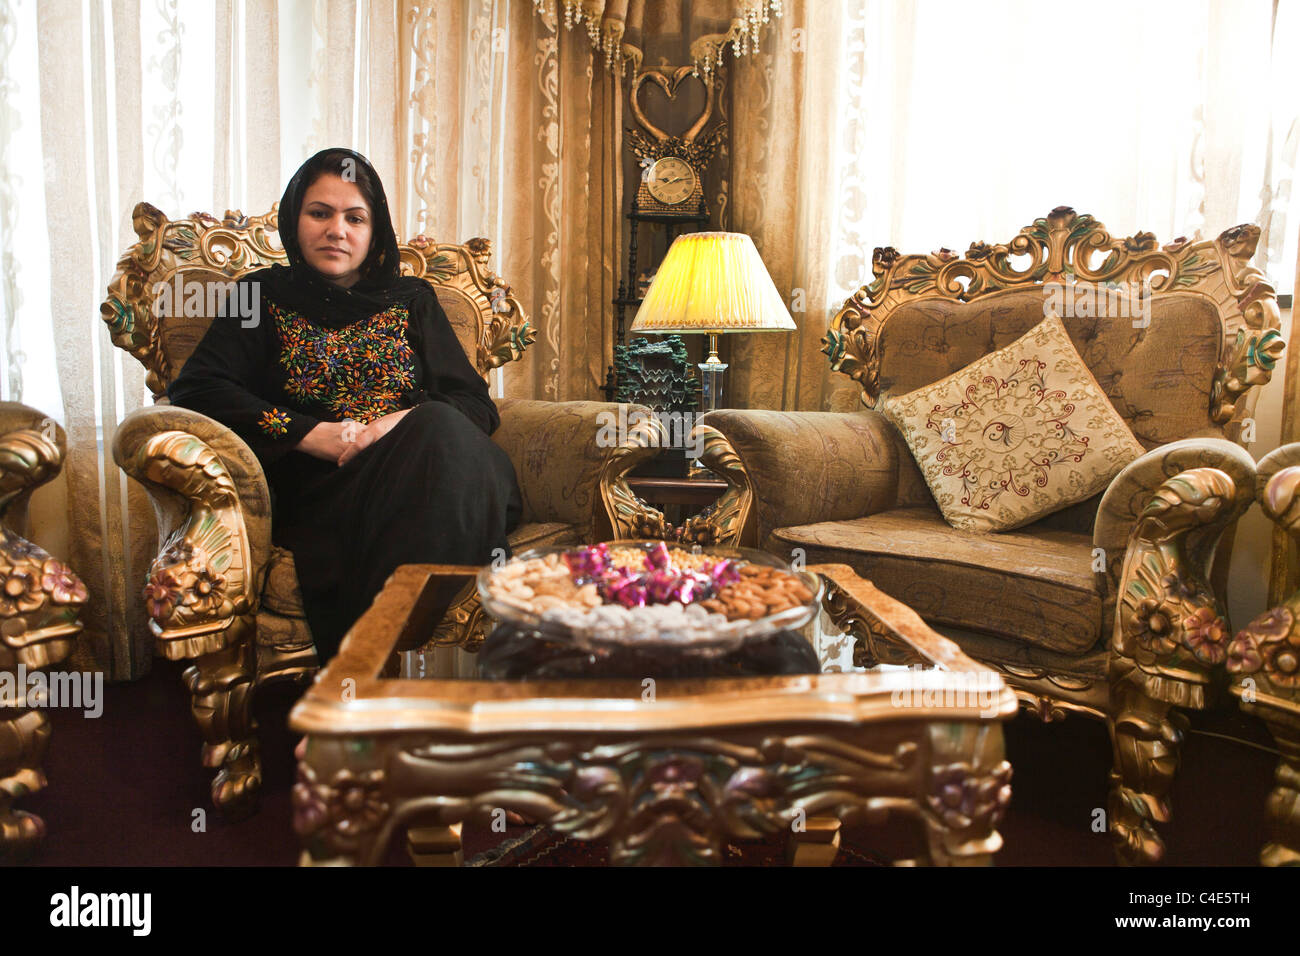 Fawzia Koofi, membro del parlamento in Afghanistan Foto Stock